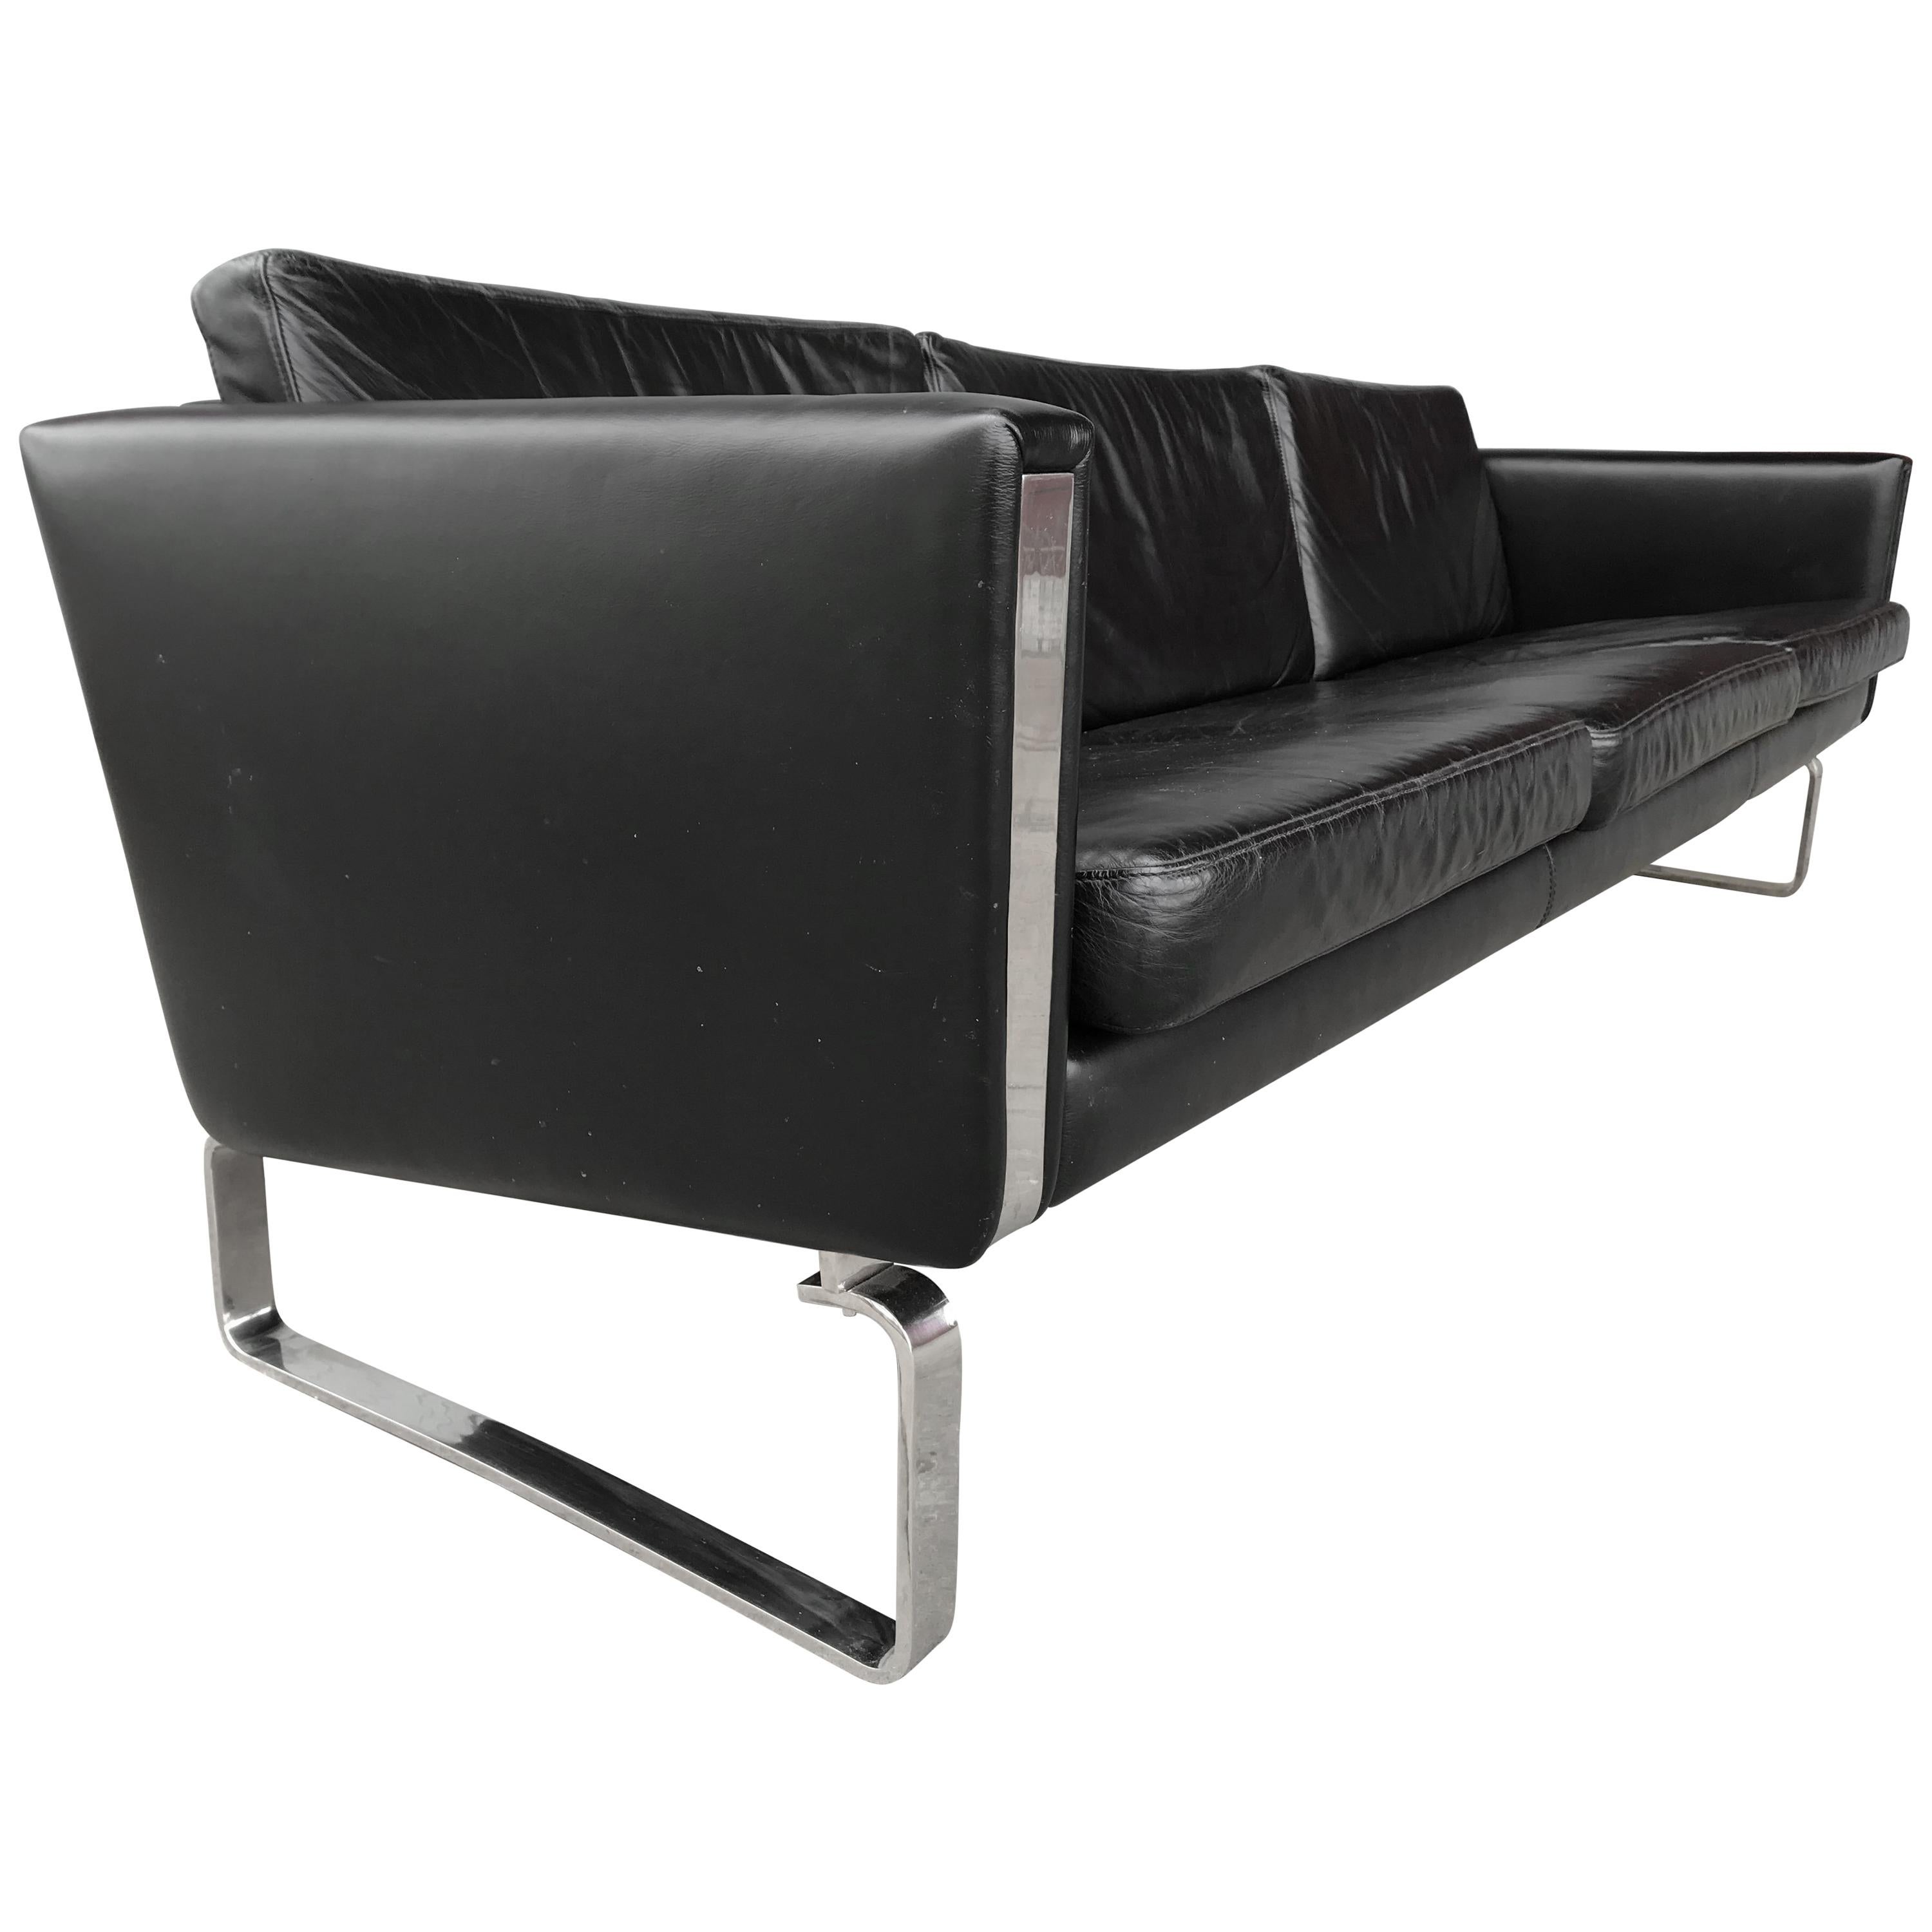 Ch103 3-Sitz-Sofa Design Hans Wegner, 1970, schwarzes Leder und verchromter Stahl